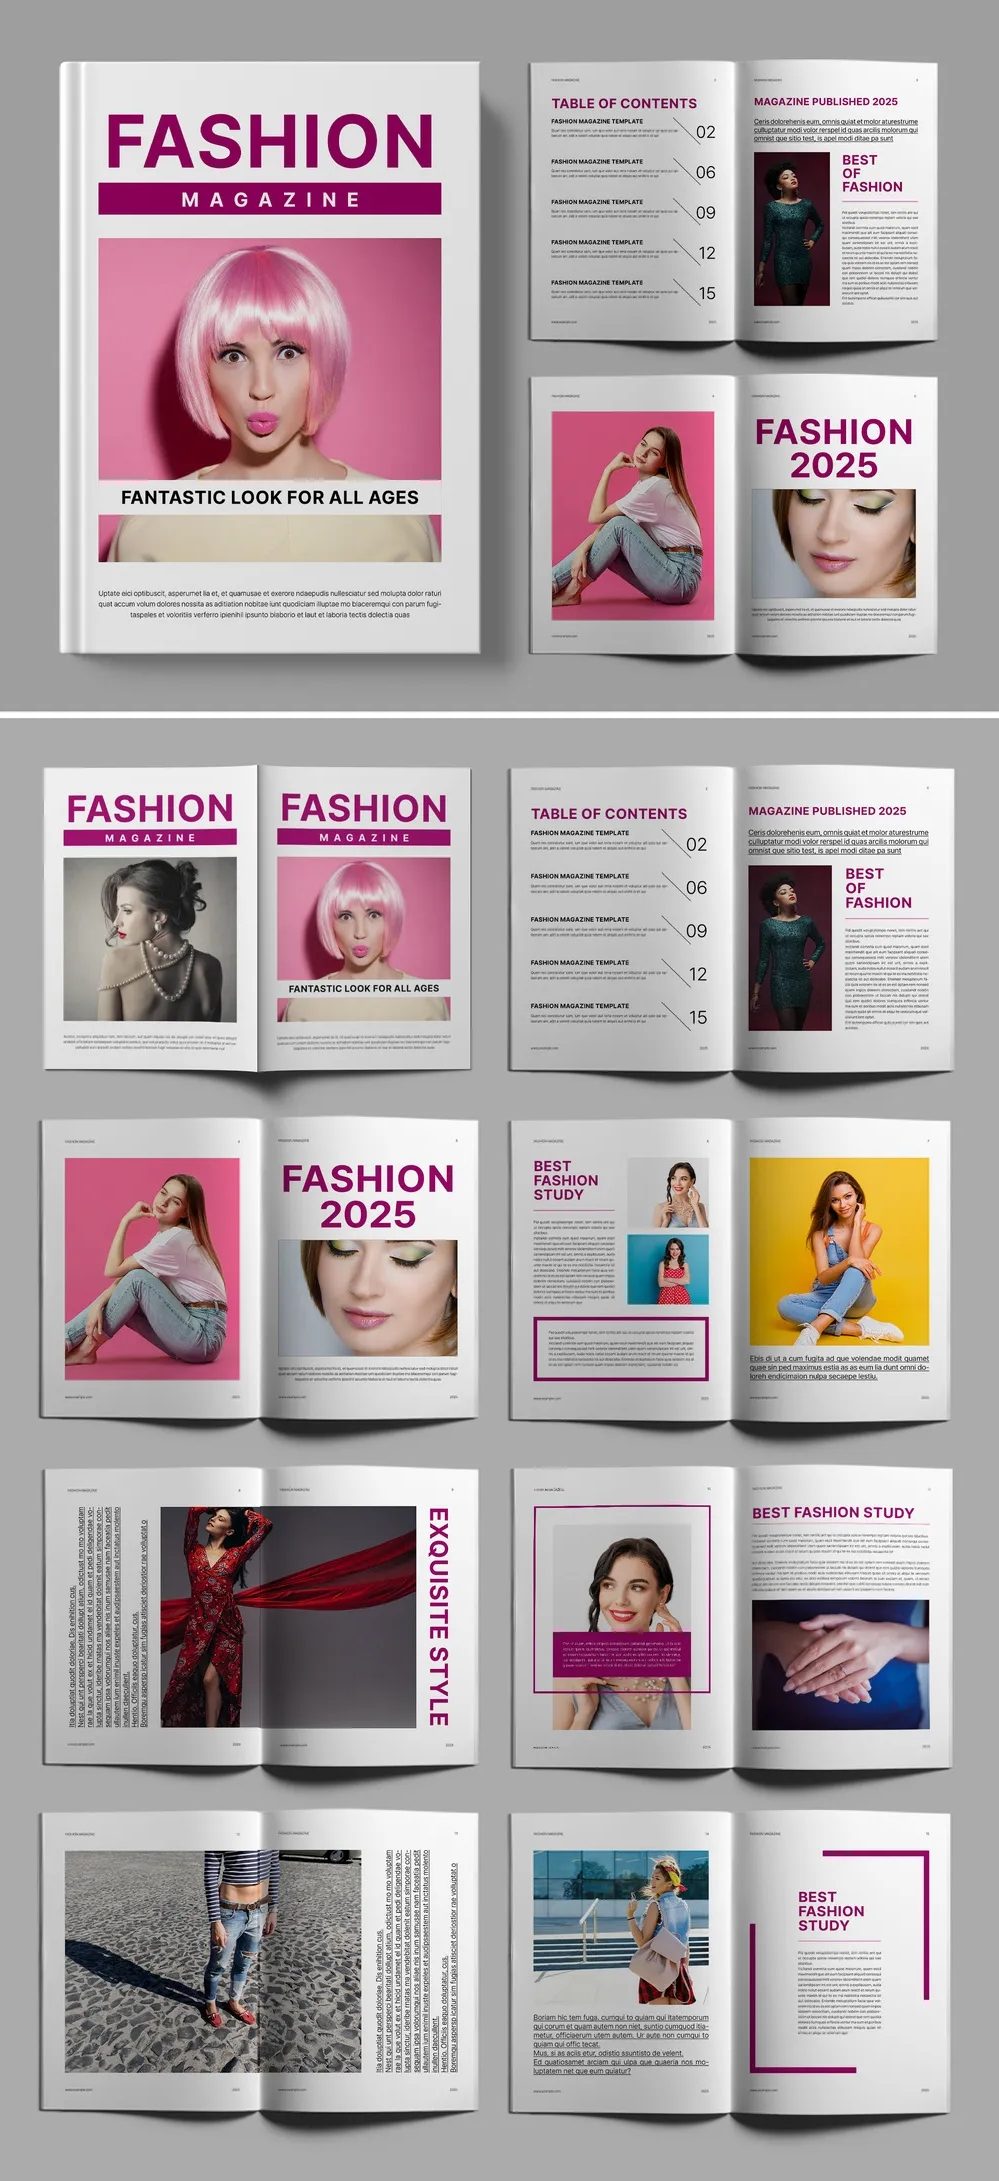 Adobestock - Fashion Magazine Template 728990299